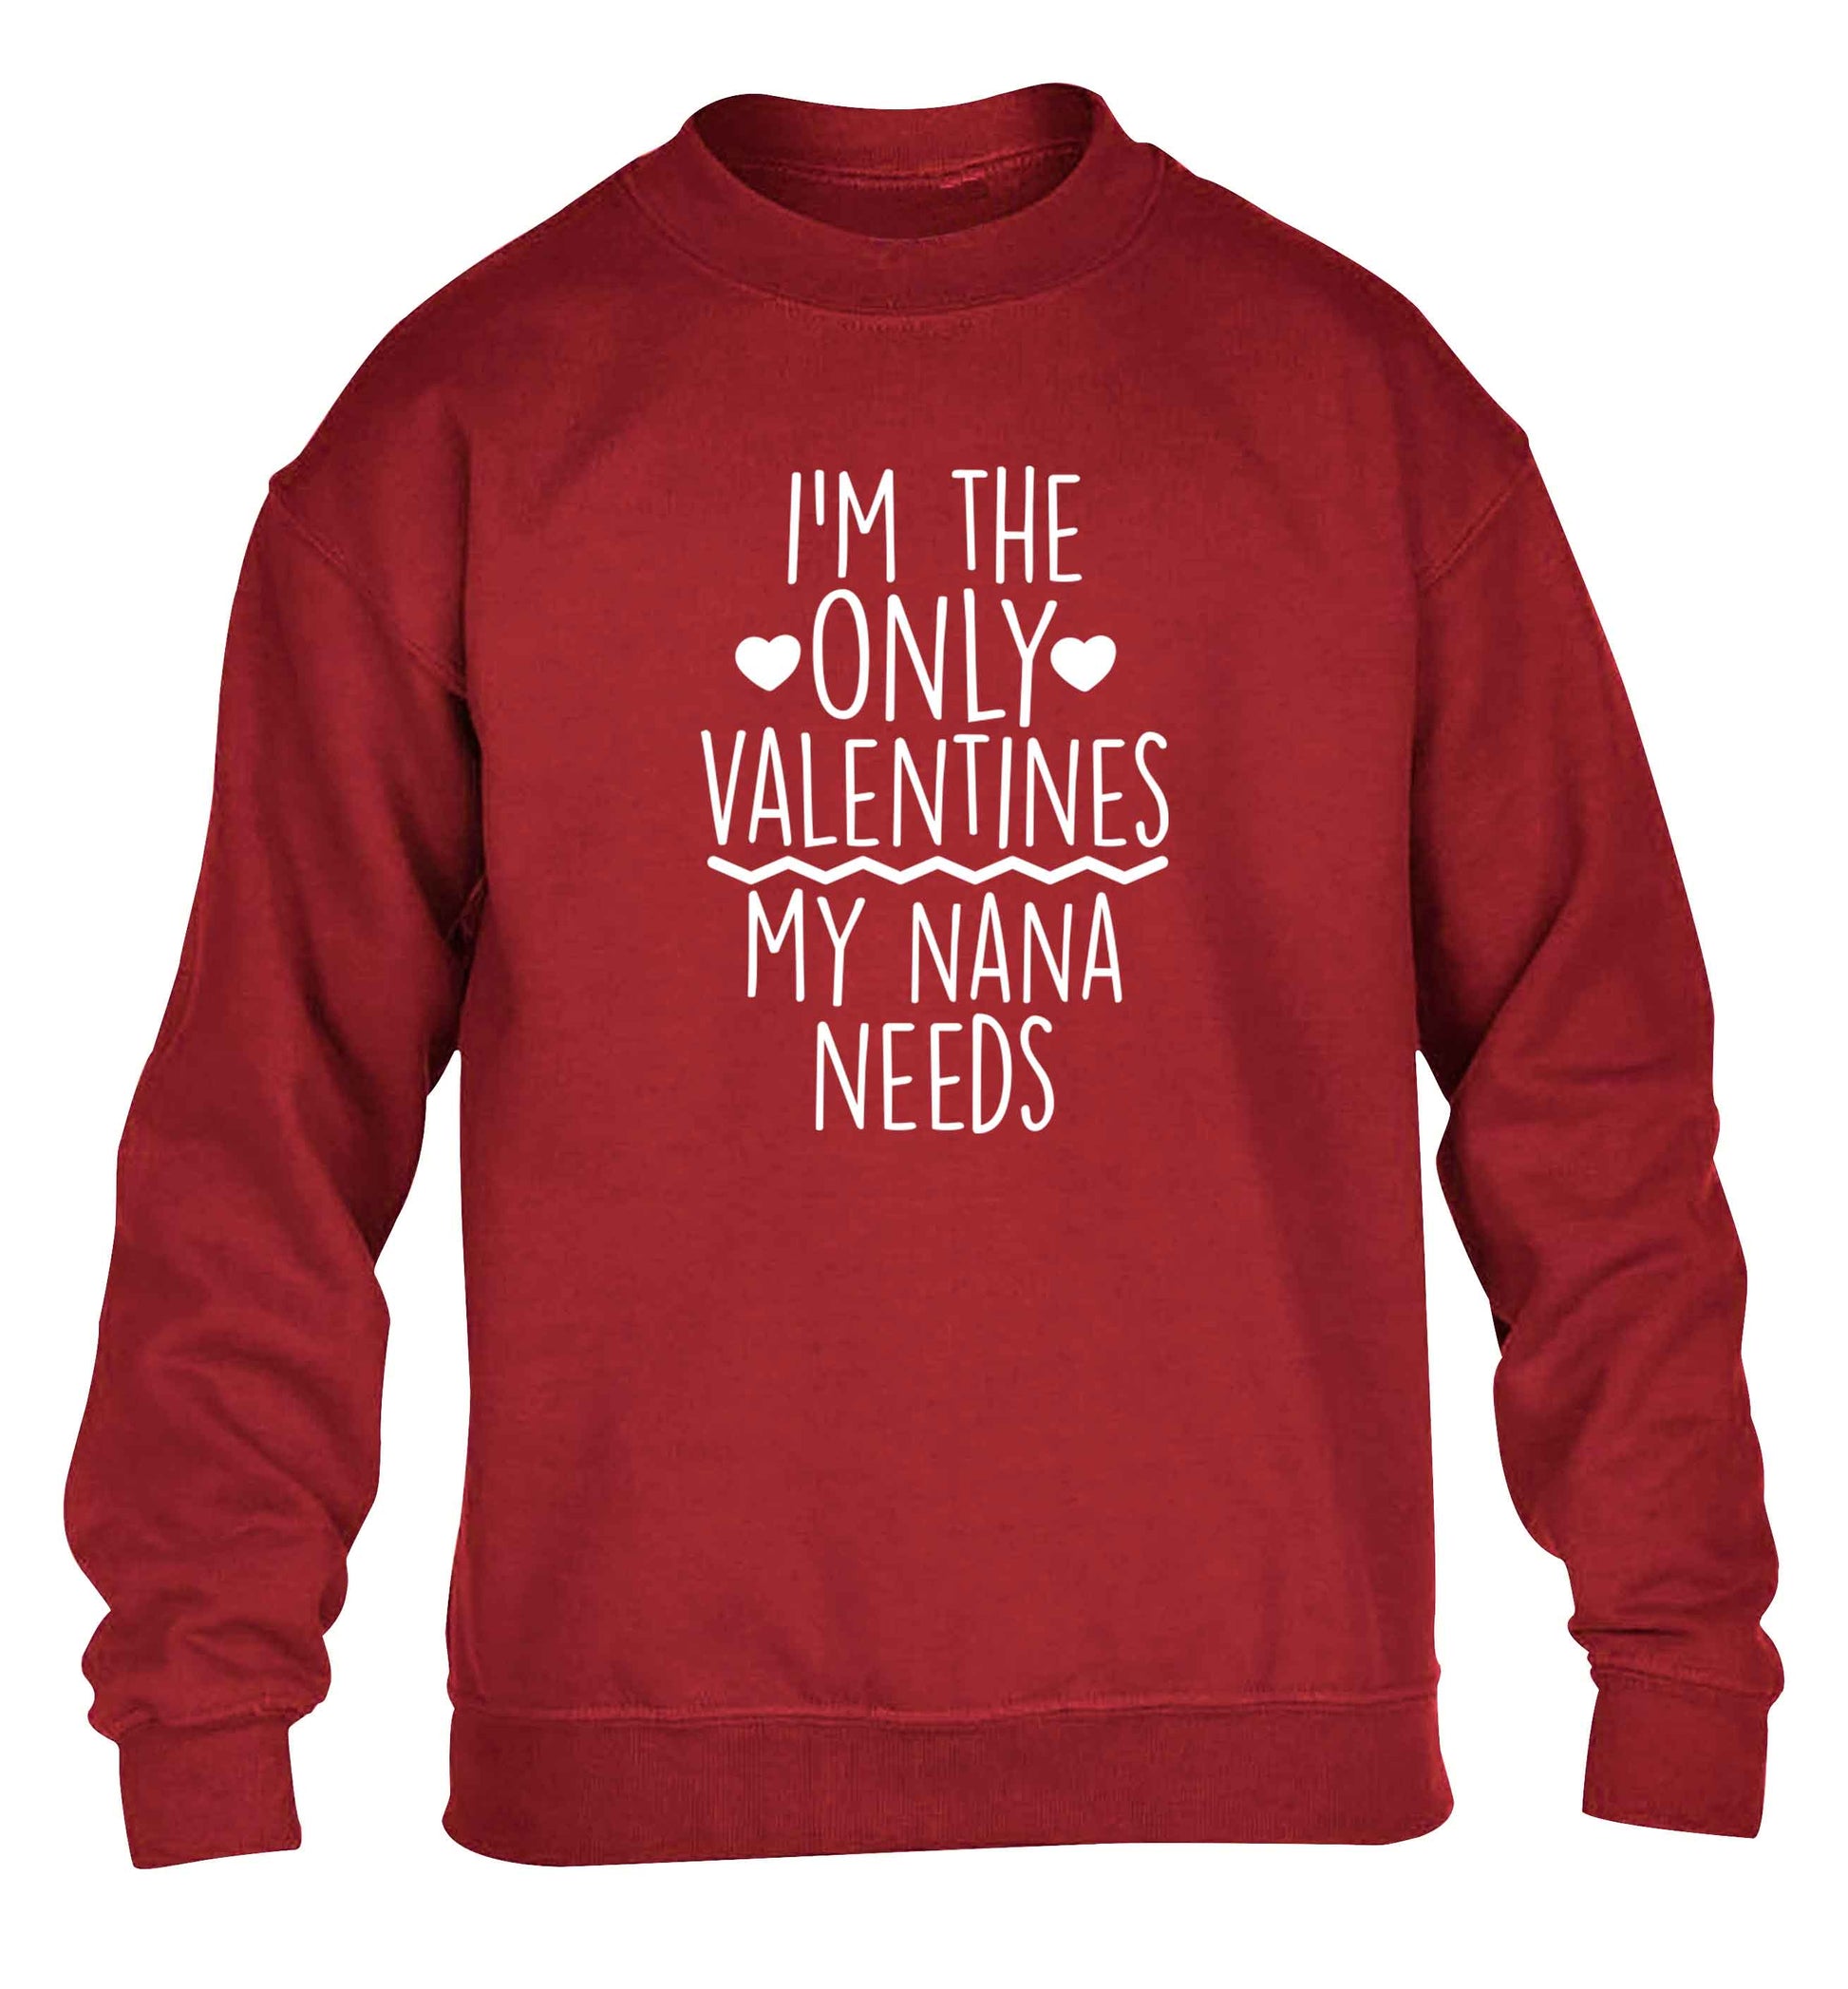 I'm the only valentines my nana needs children's grey sweater 12-13 Years